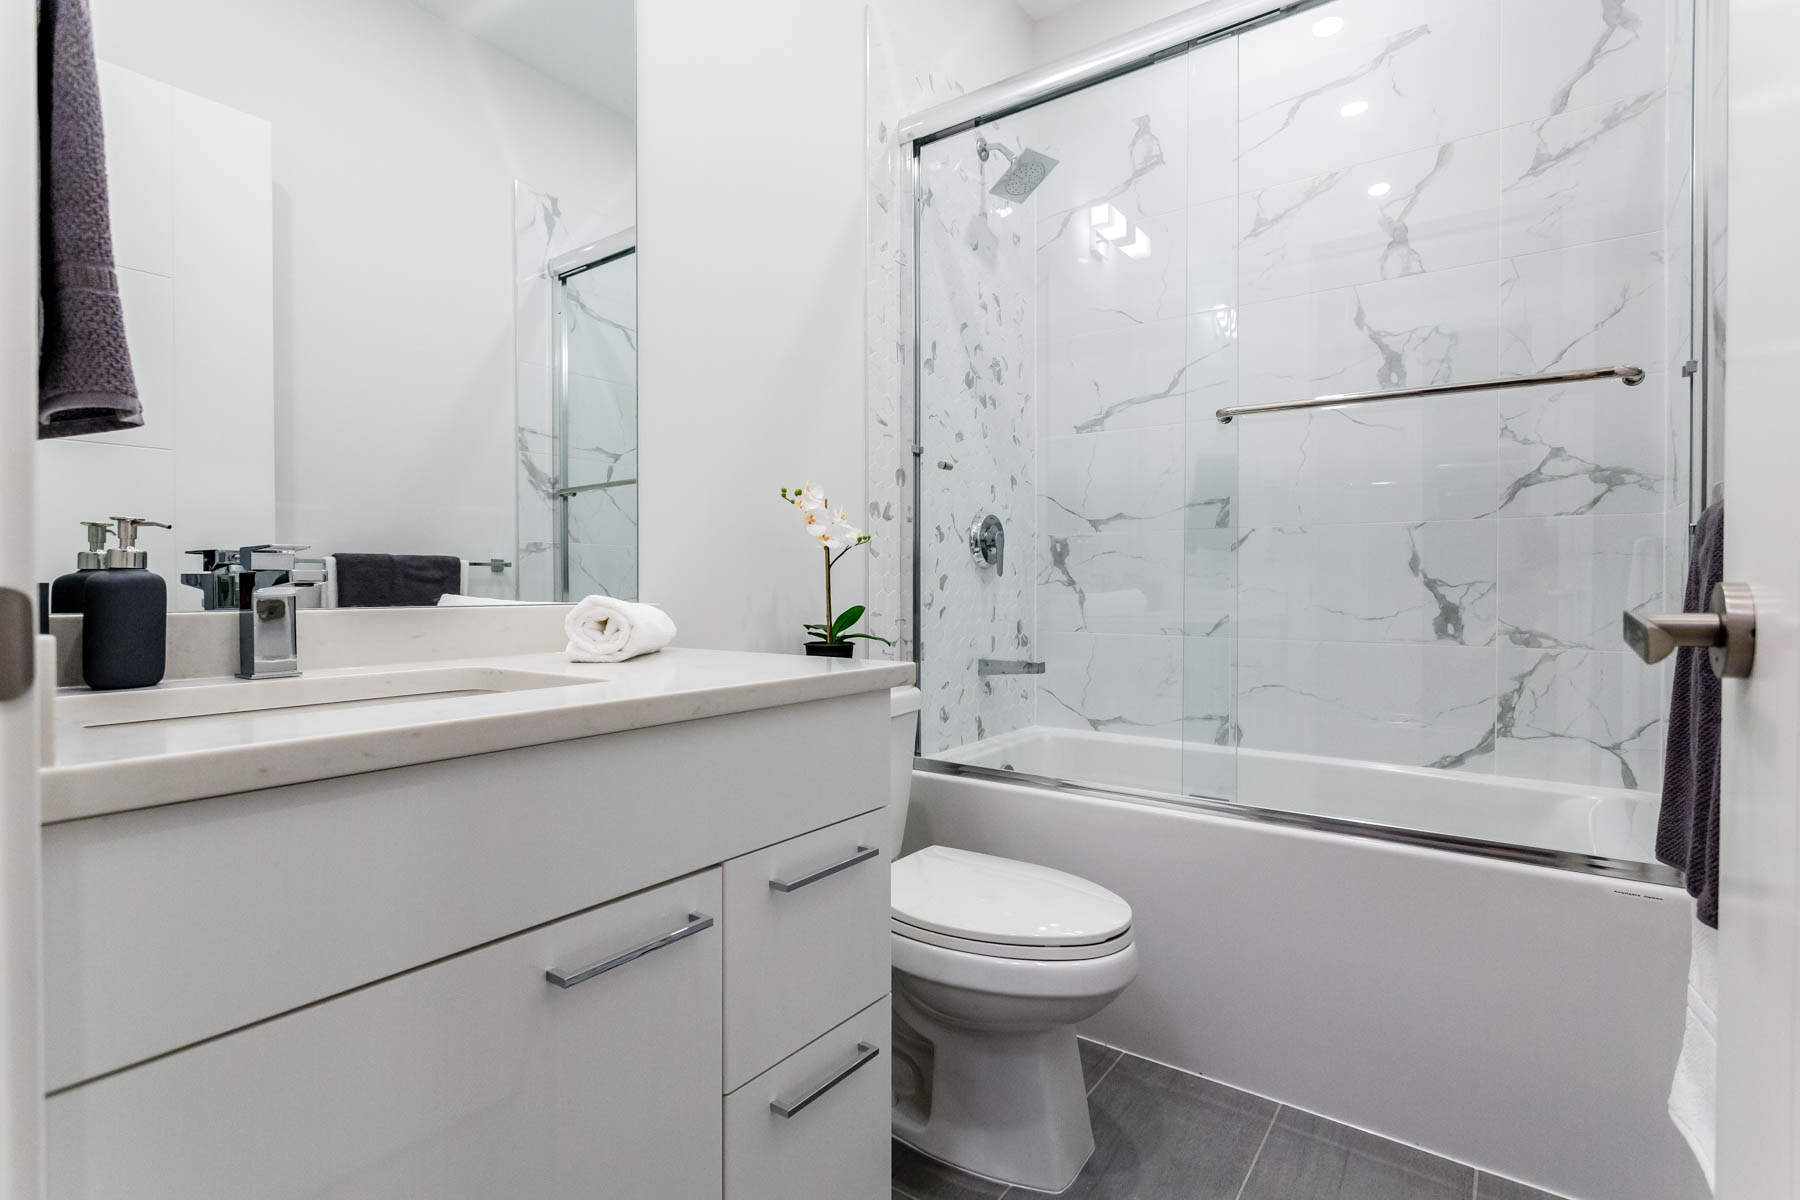 Natural stone granite countertops fill the spa-inspired bathrooms.